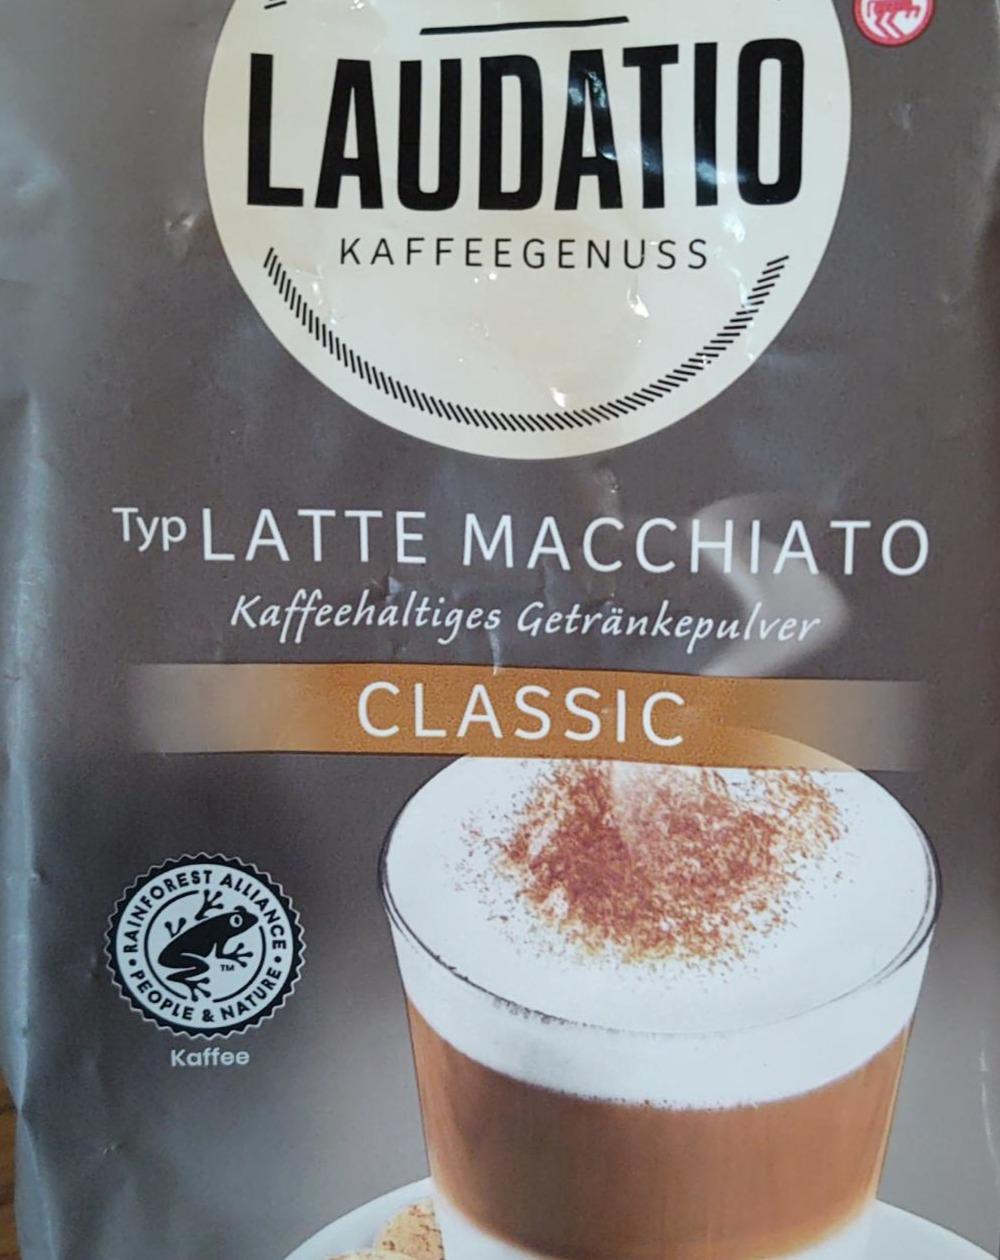 Zdjęcia - Typ Latte Macchiato Classic Laudatio